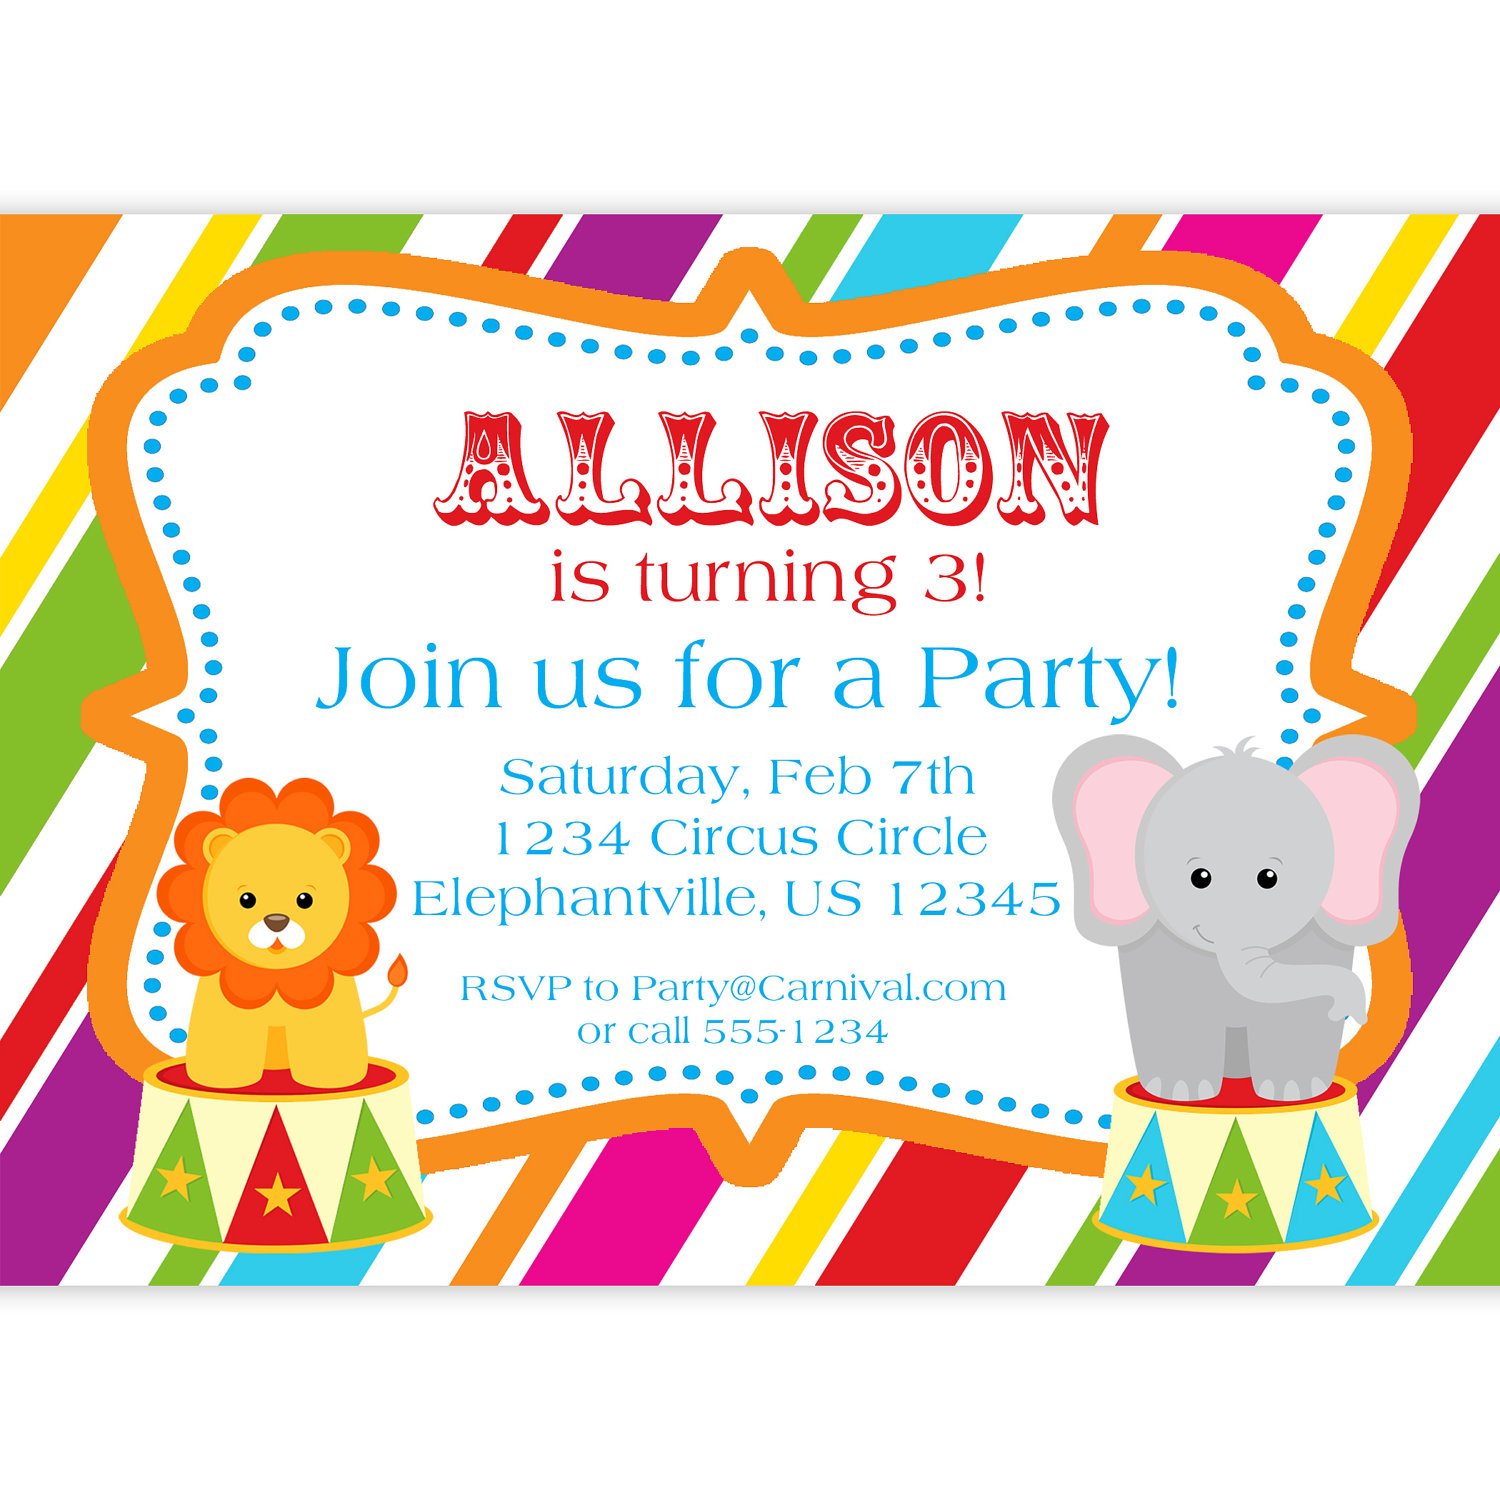 art-birthday-party-invitations-for-your-kids-free-printable-birthday-invitation-templates